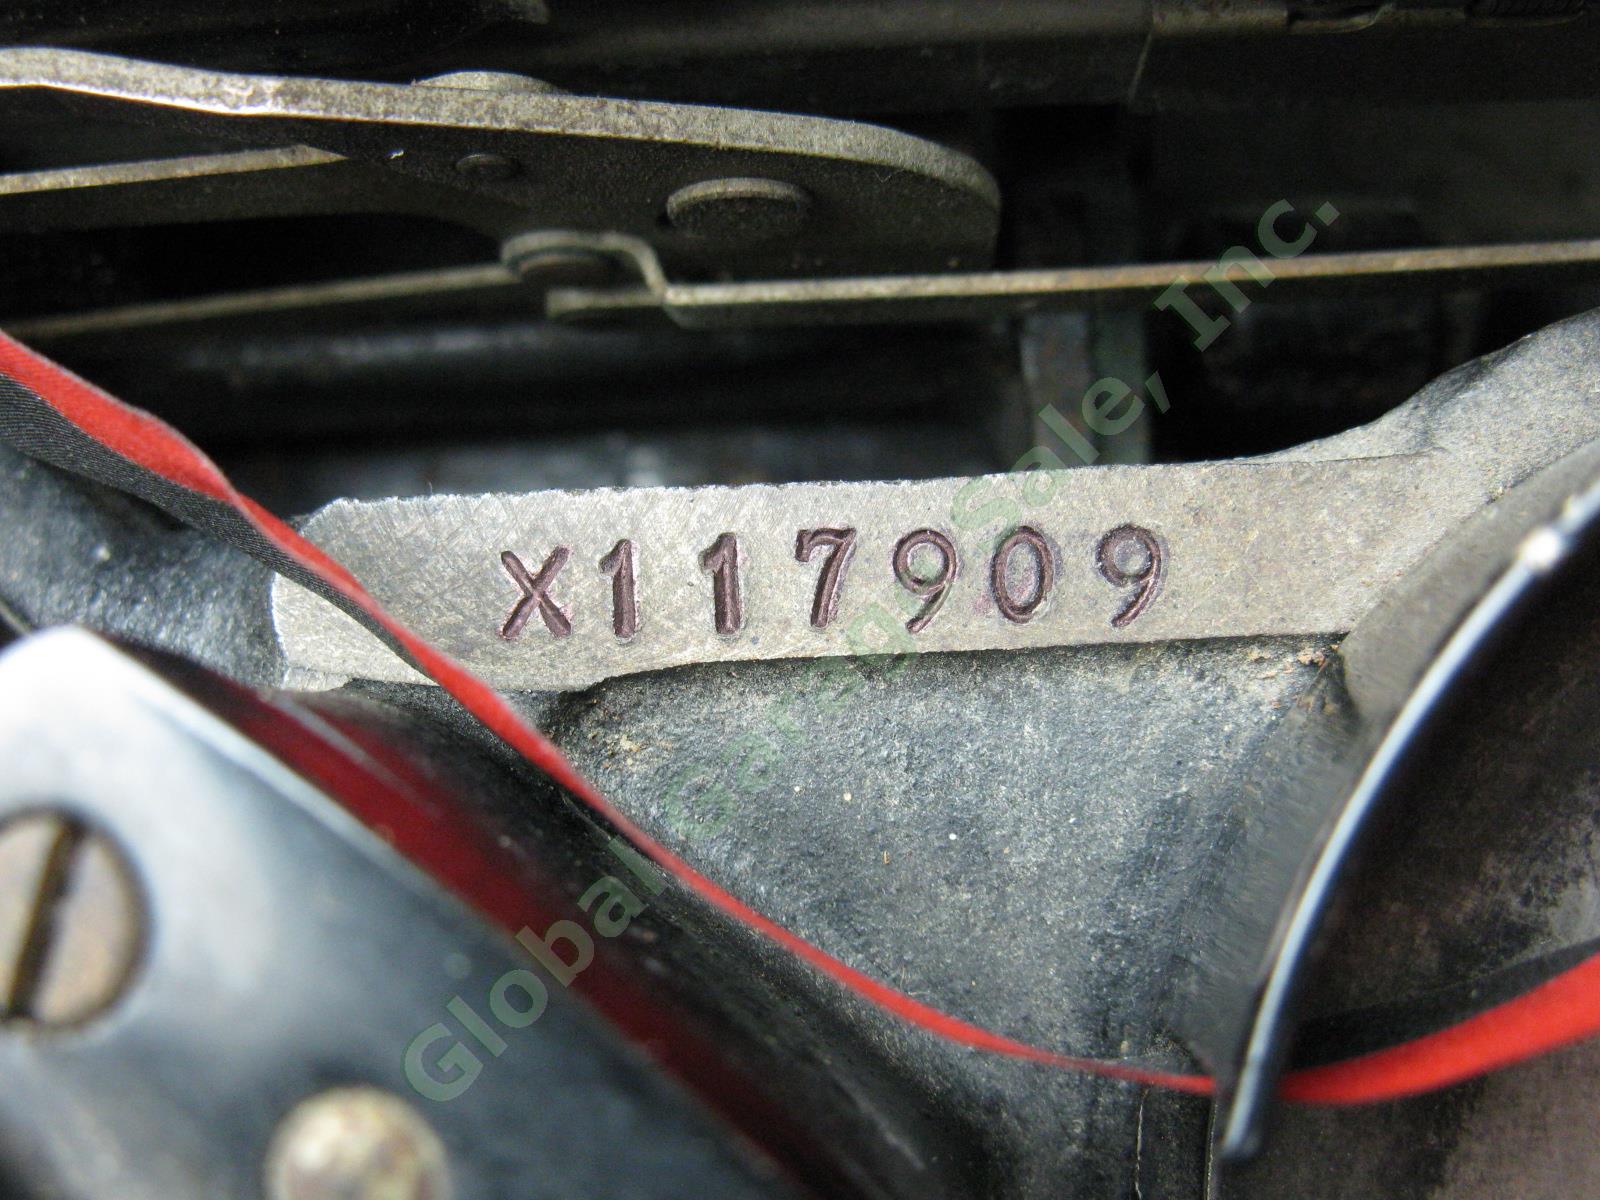 Vtg Antique 1929 Remington Noiseless 6 Manual Typewriter Serial X117909 Cleaned 3